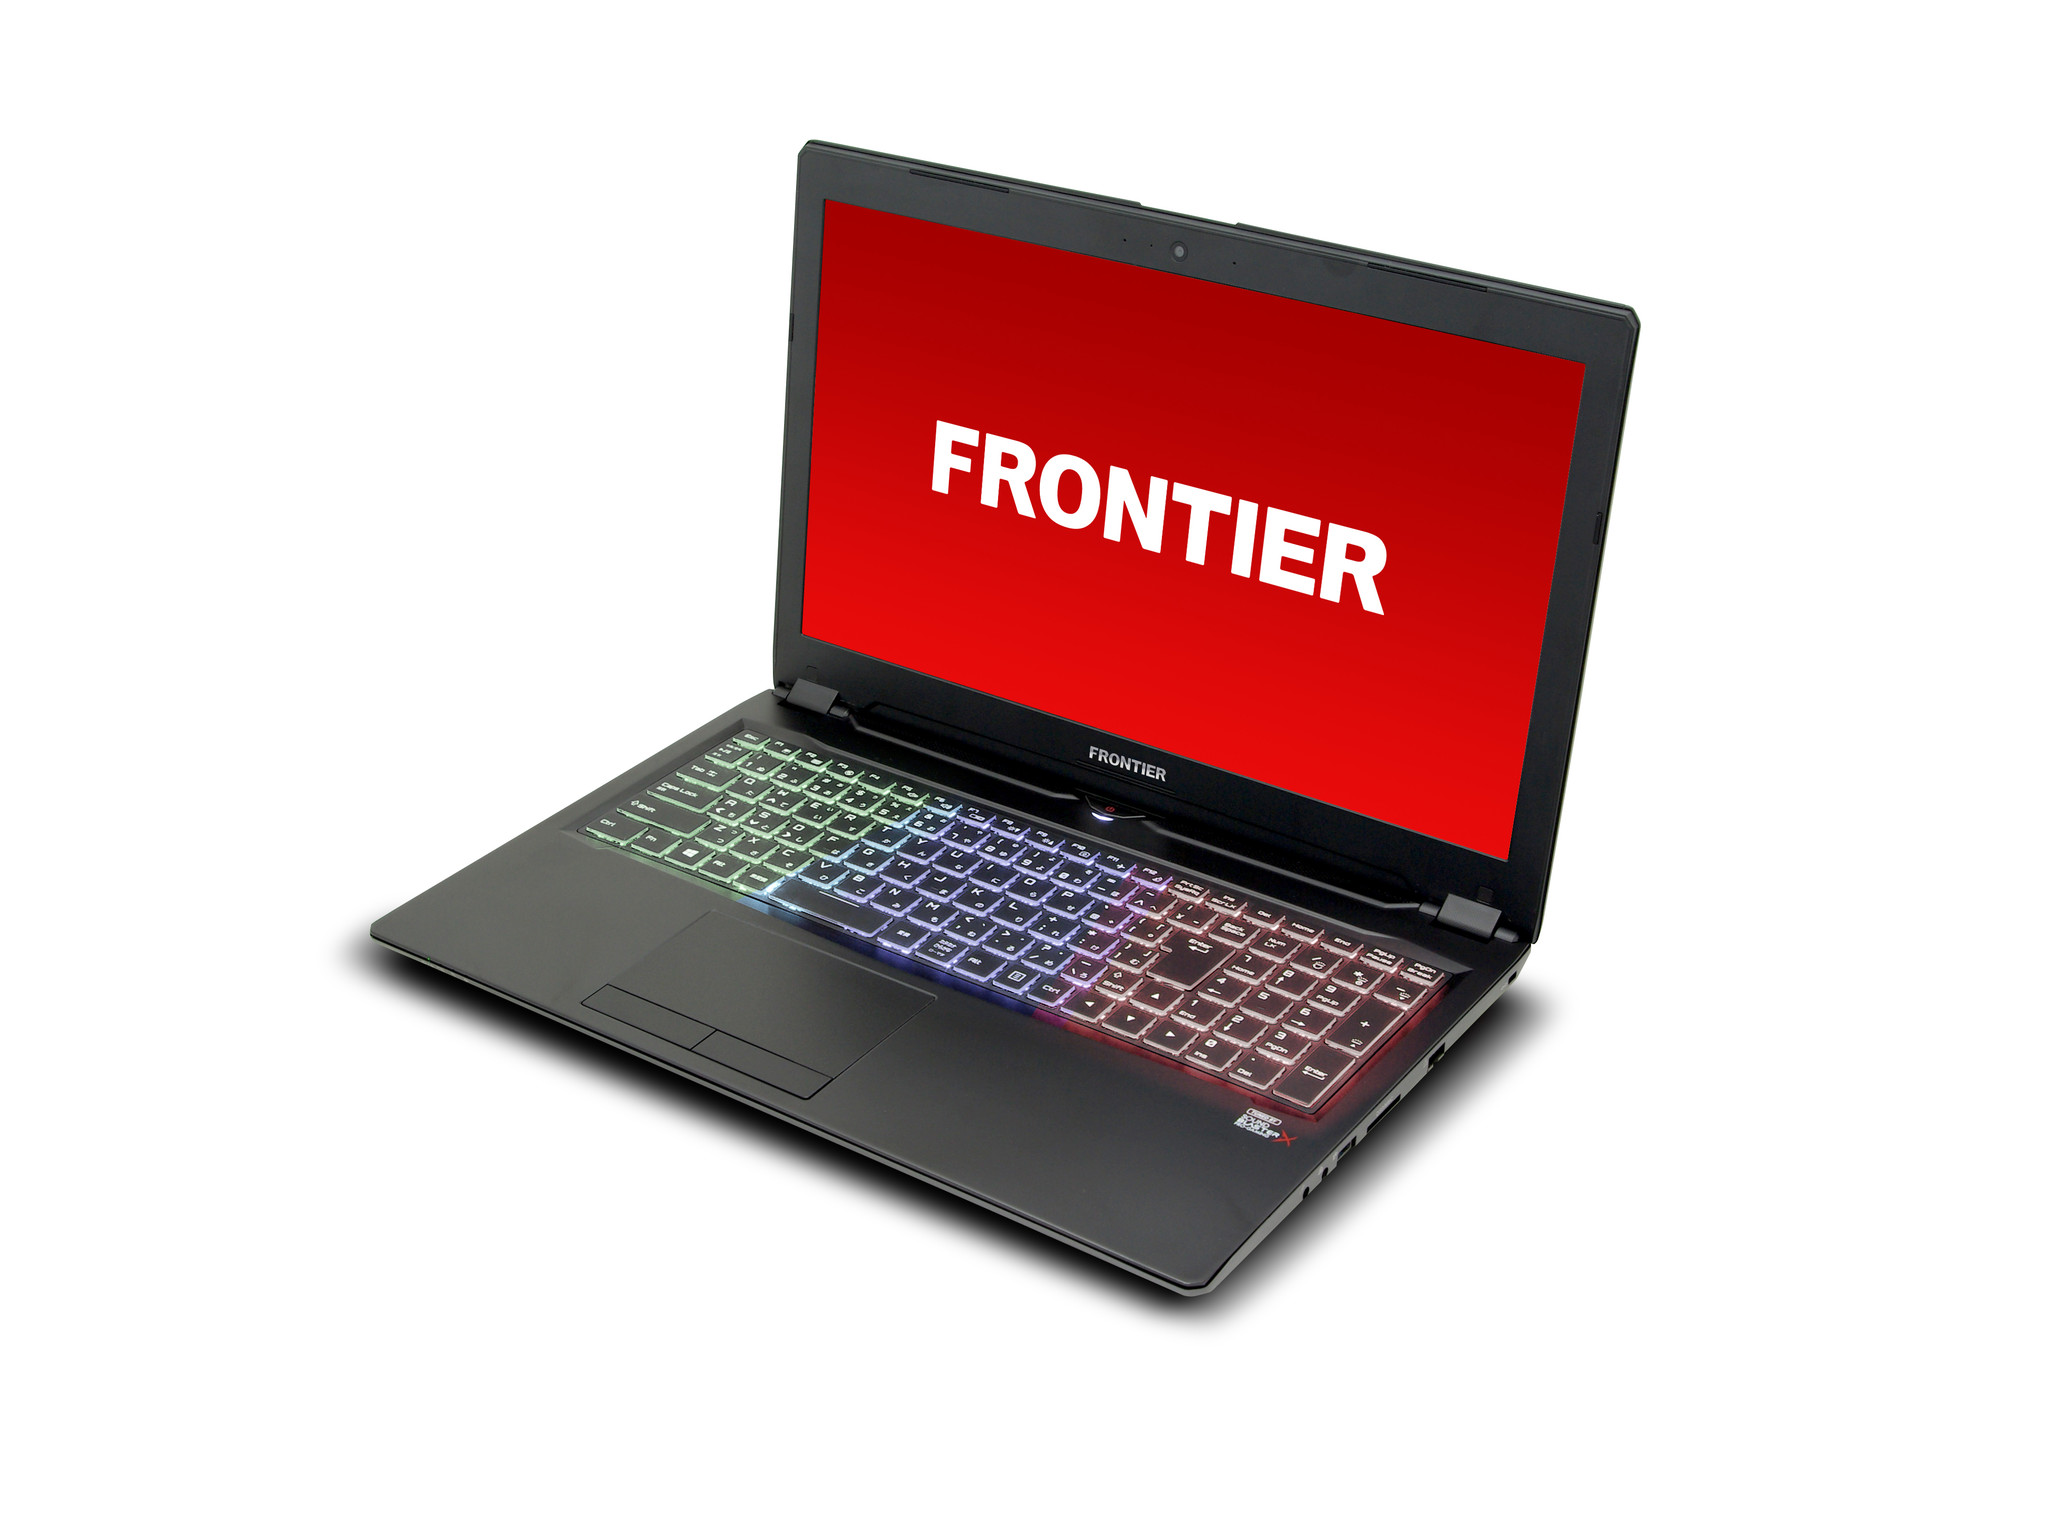 PC/タブレット デスクトップ型PC 【FRONTIER】薄型で高性能 NVIDIA GeForce GTX 1060搭載 